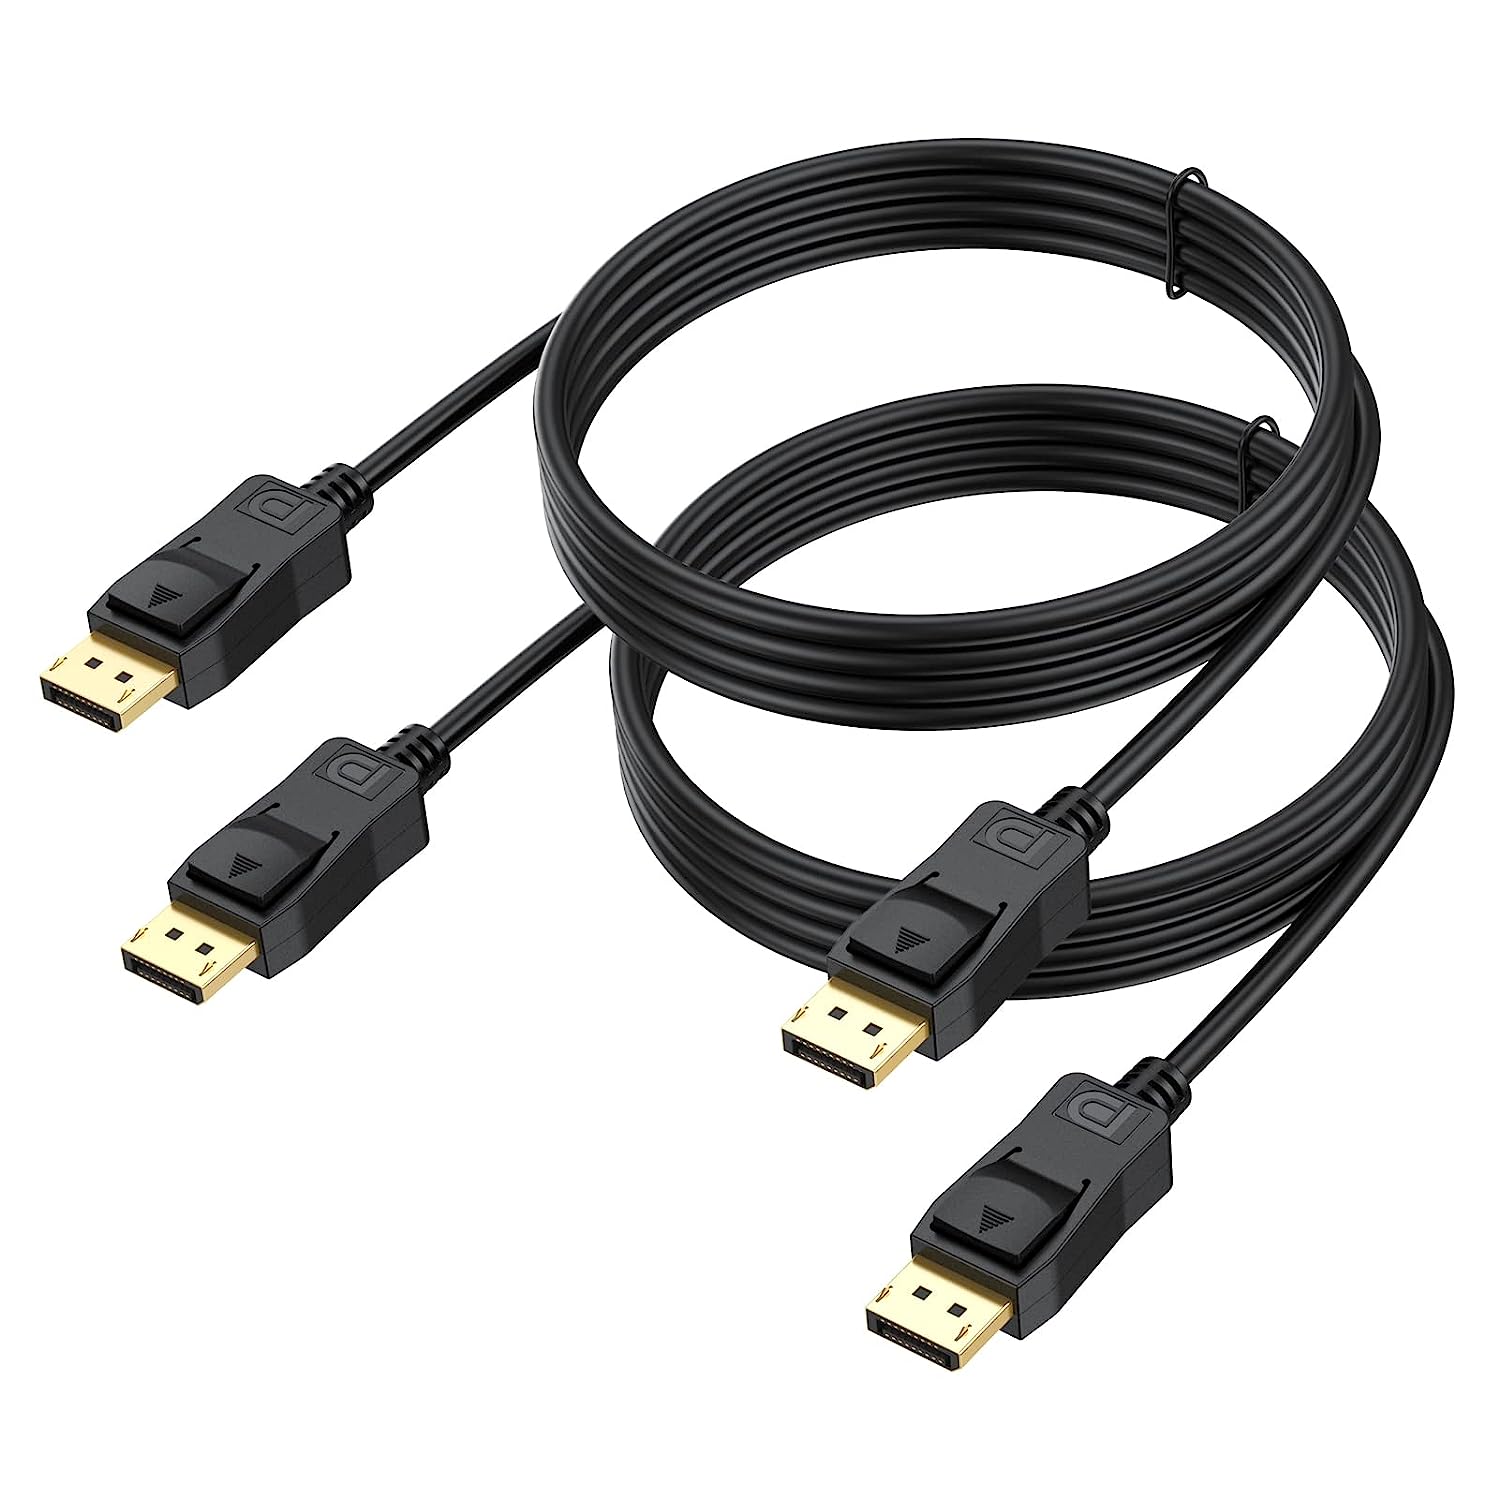 UVOOI DisplayPort to DisplayPort Cable 6FT 2-Pack, [...]